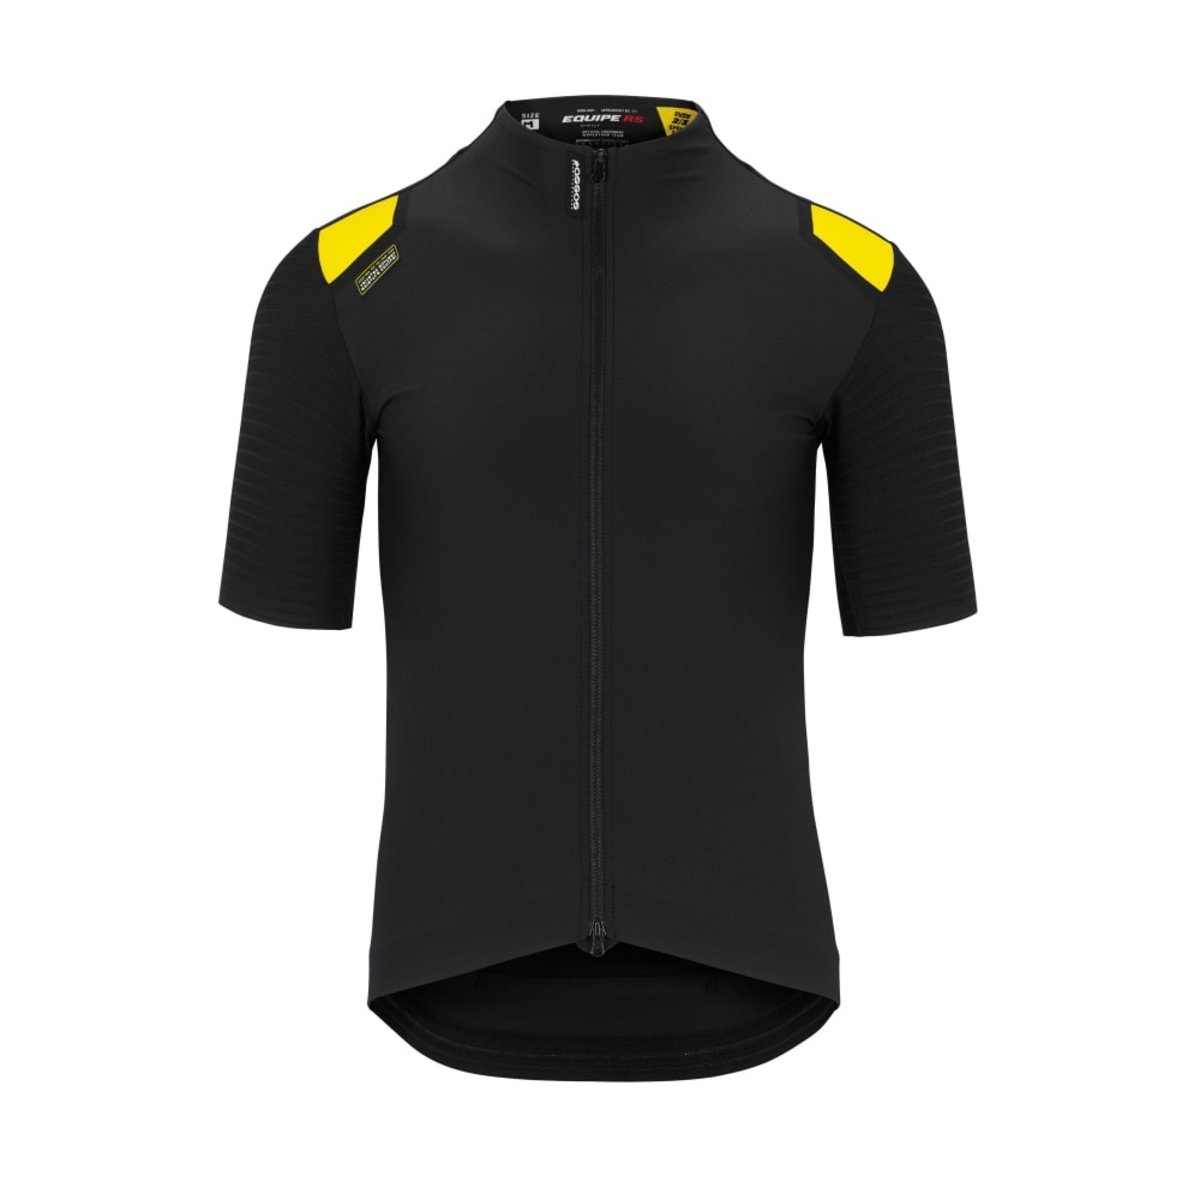 Джерси ASSOS Equipe RS Spring Fall Aero SS Jersey Black Series, кор. рукав, мужское, черное с желтым, XLG